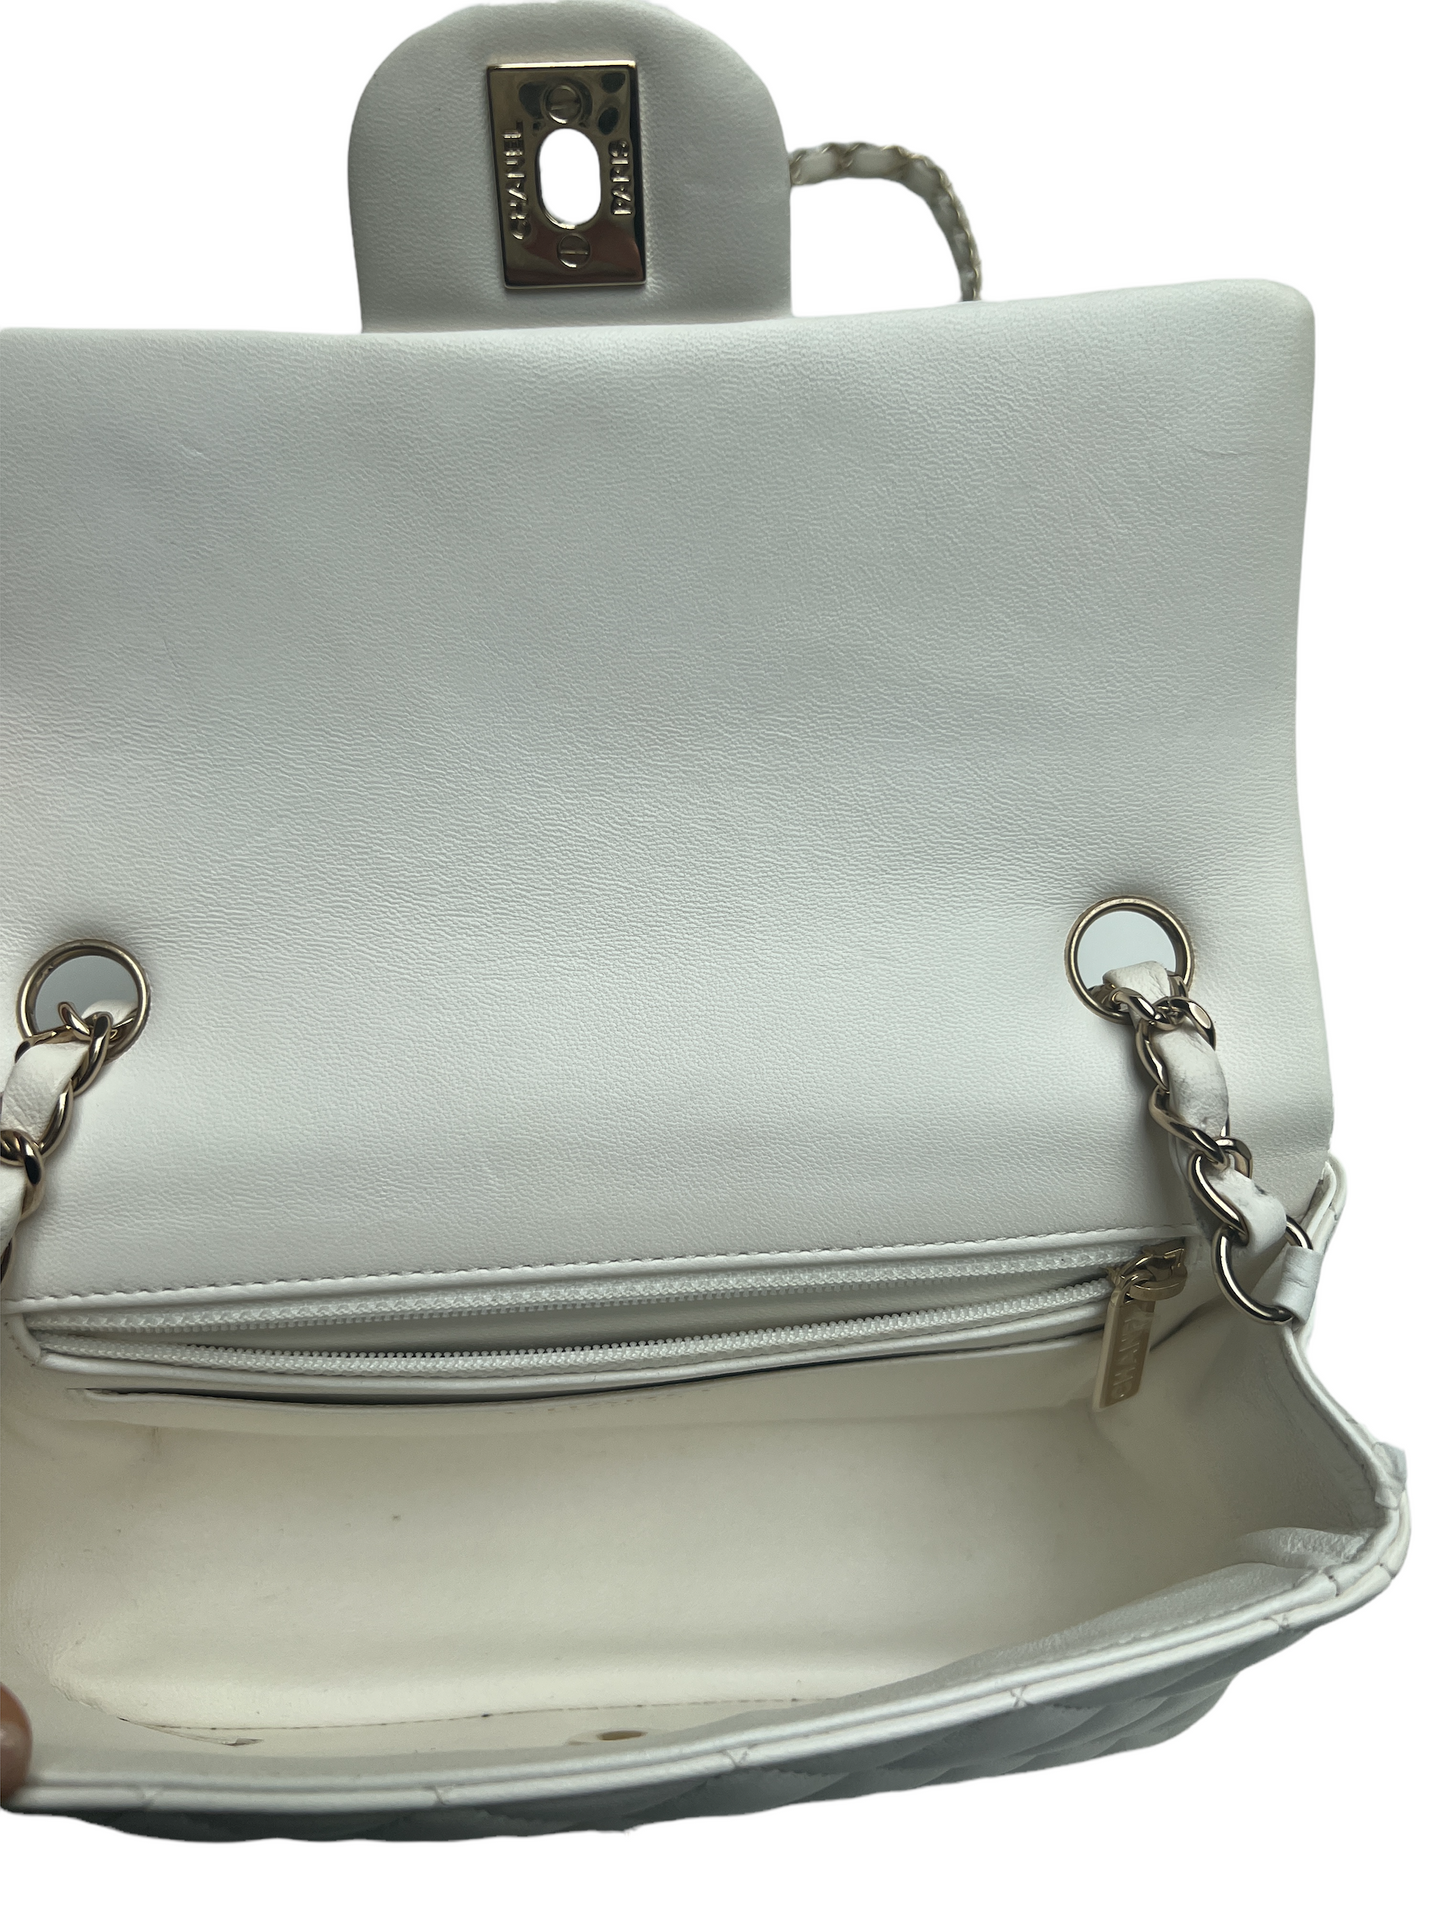 2021 White Leather Classic Mini Flap